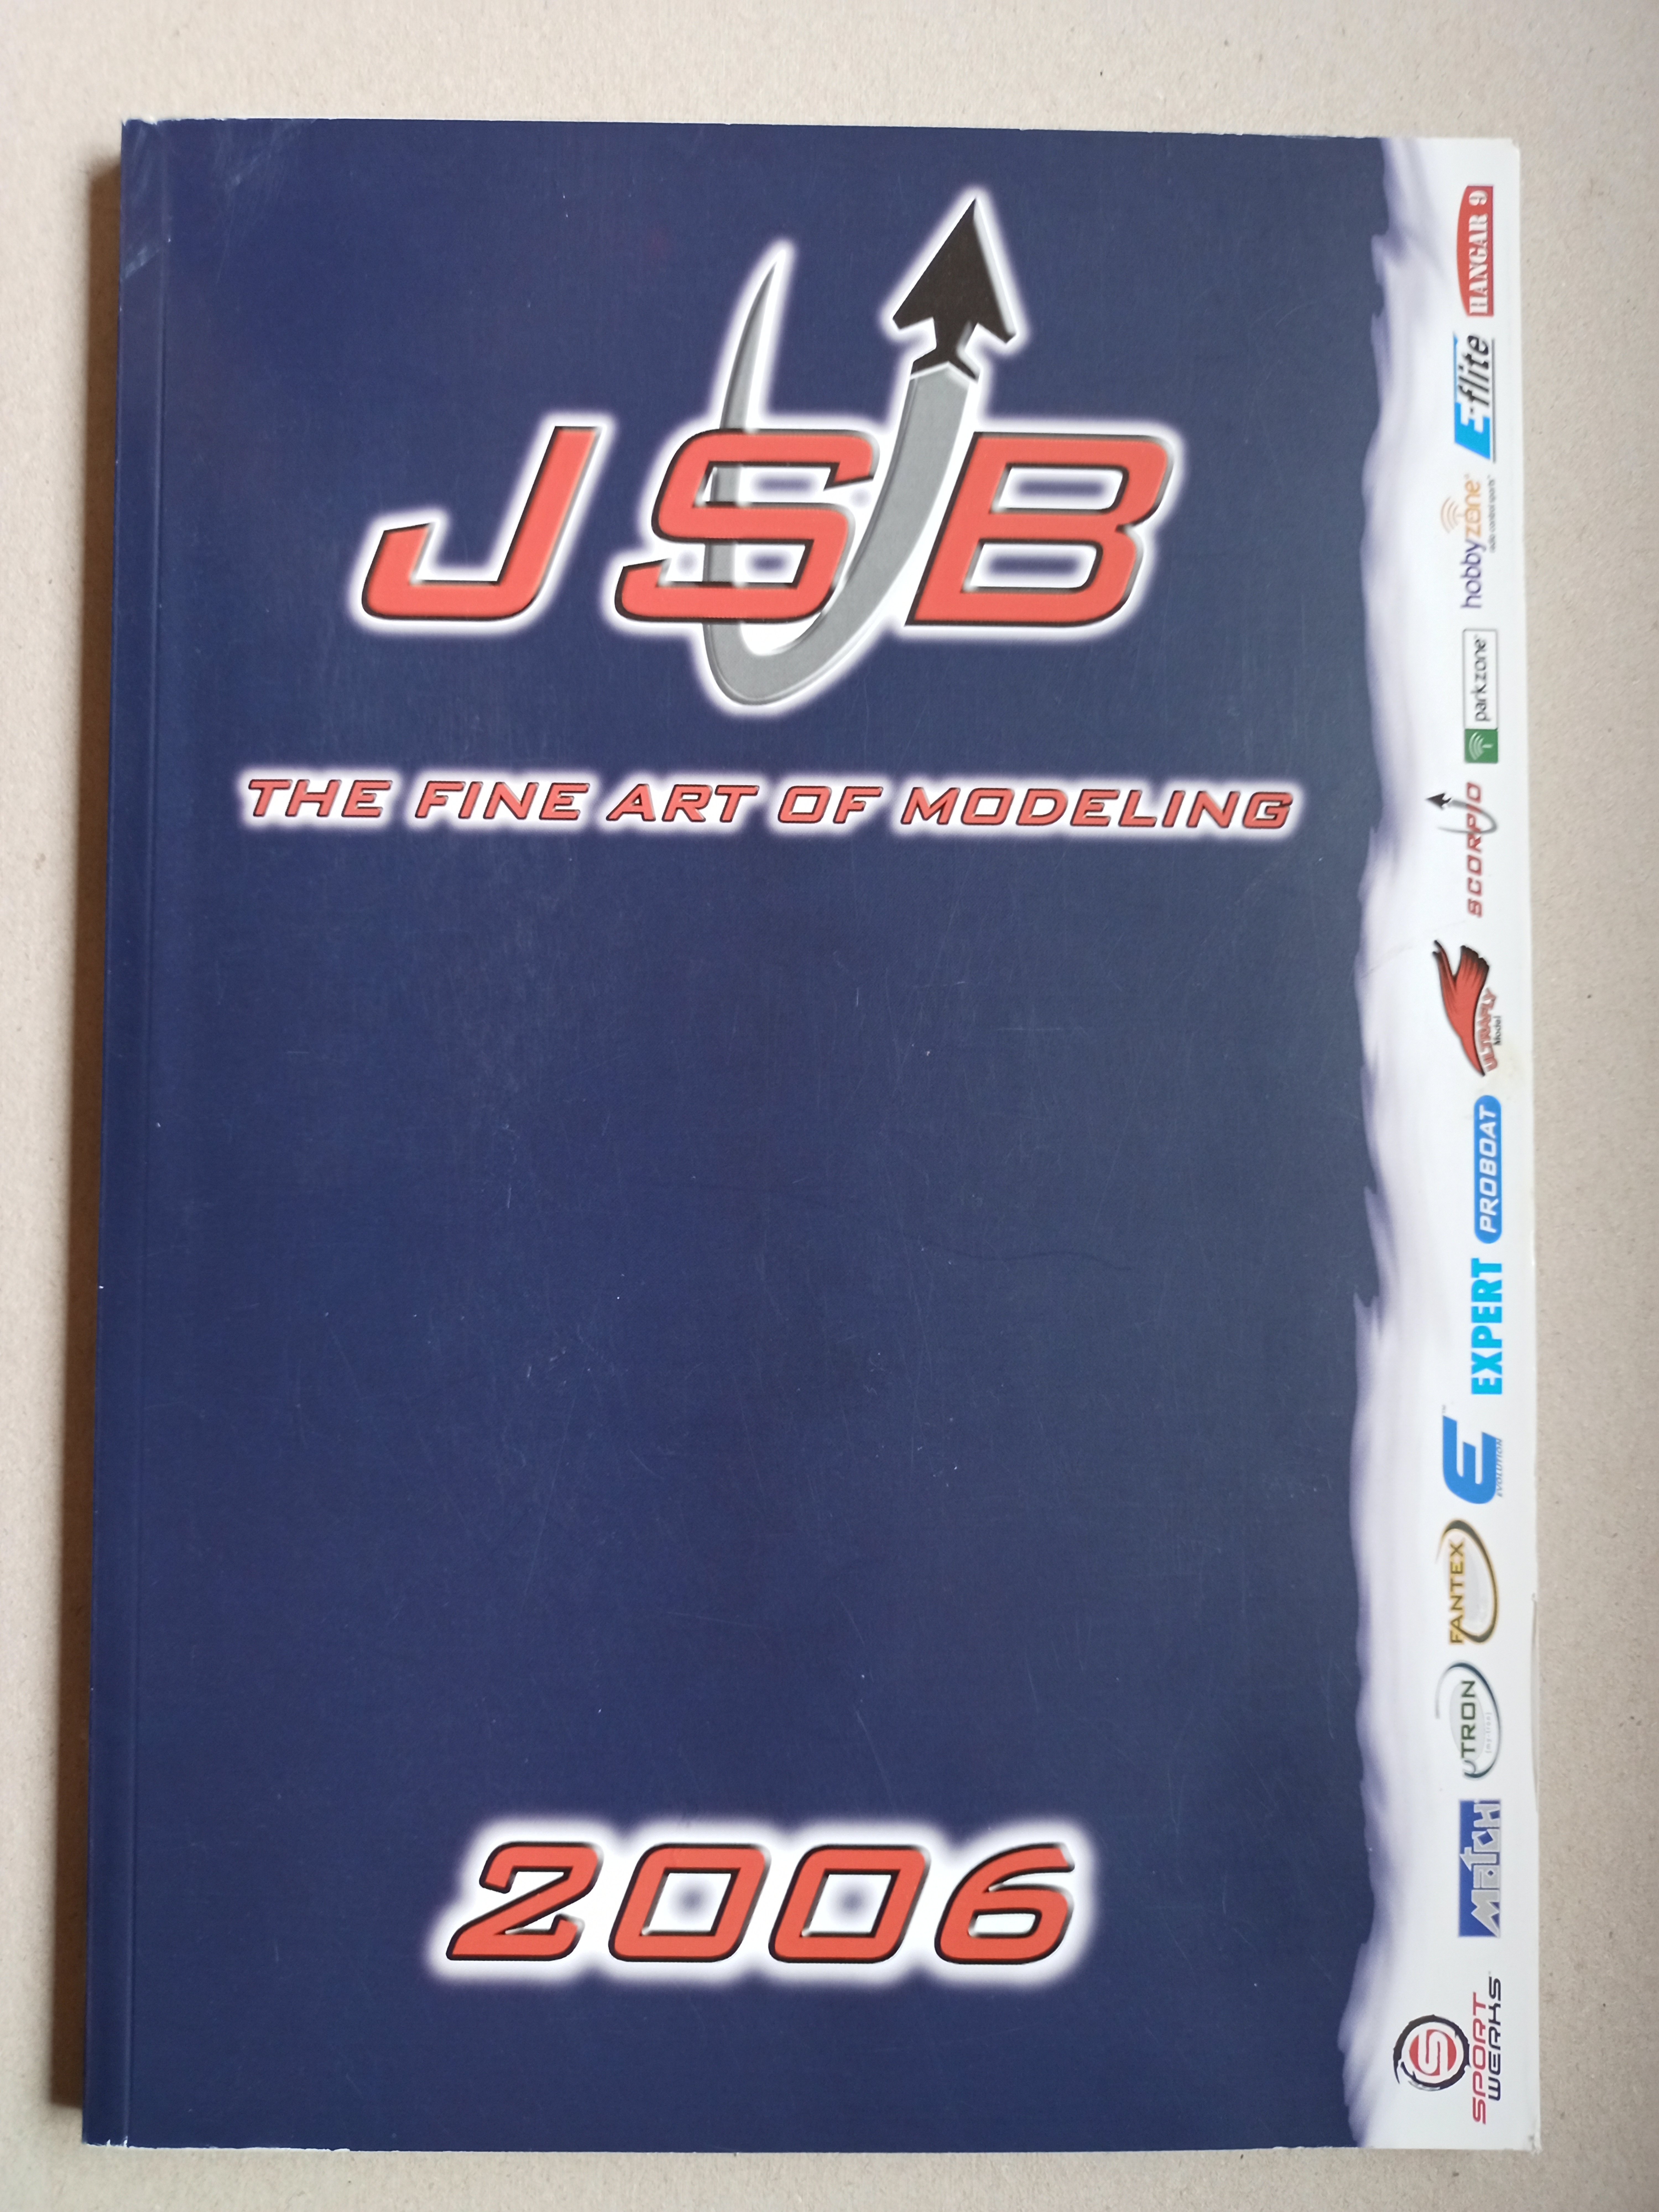 Katalog JSB 2006 (Deutsches Segelflugmuseum mit Modellflug CC BY-NC-SA)